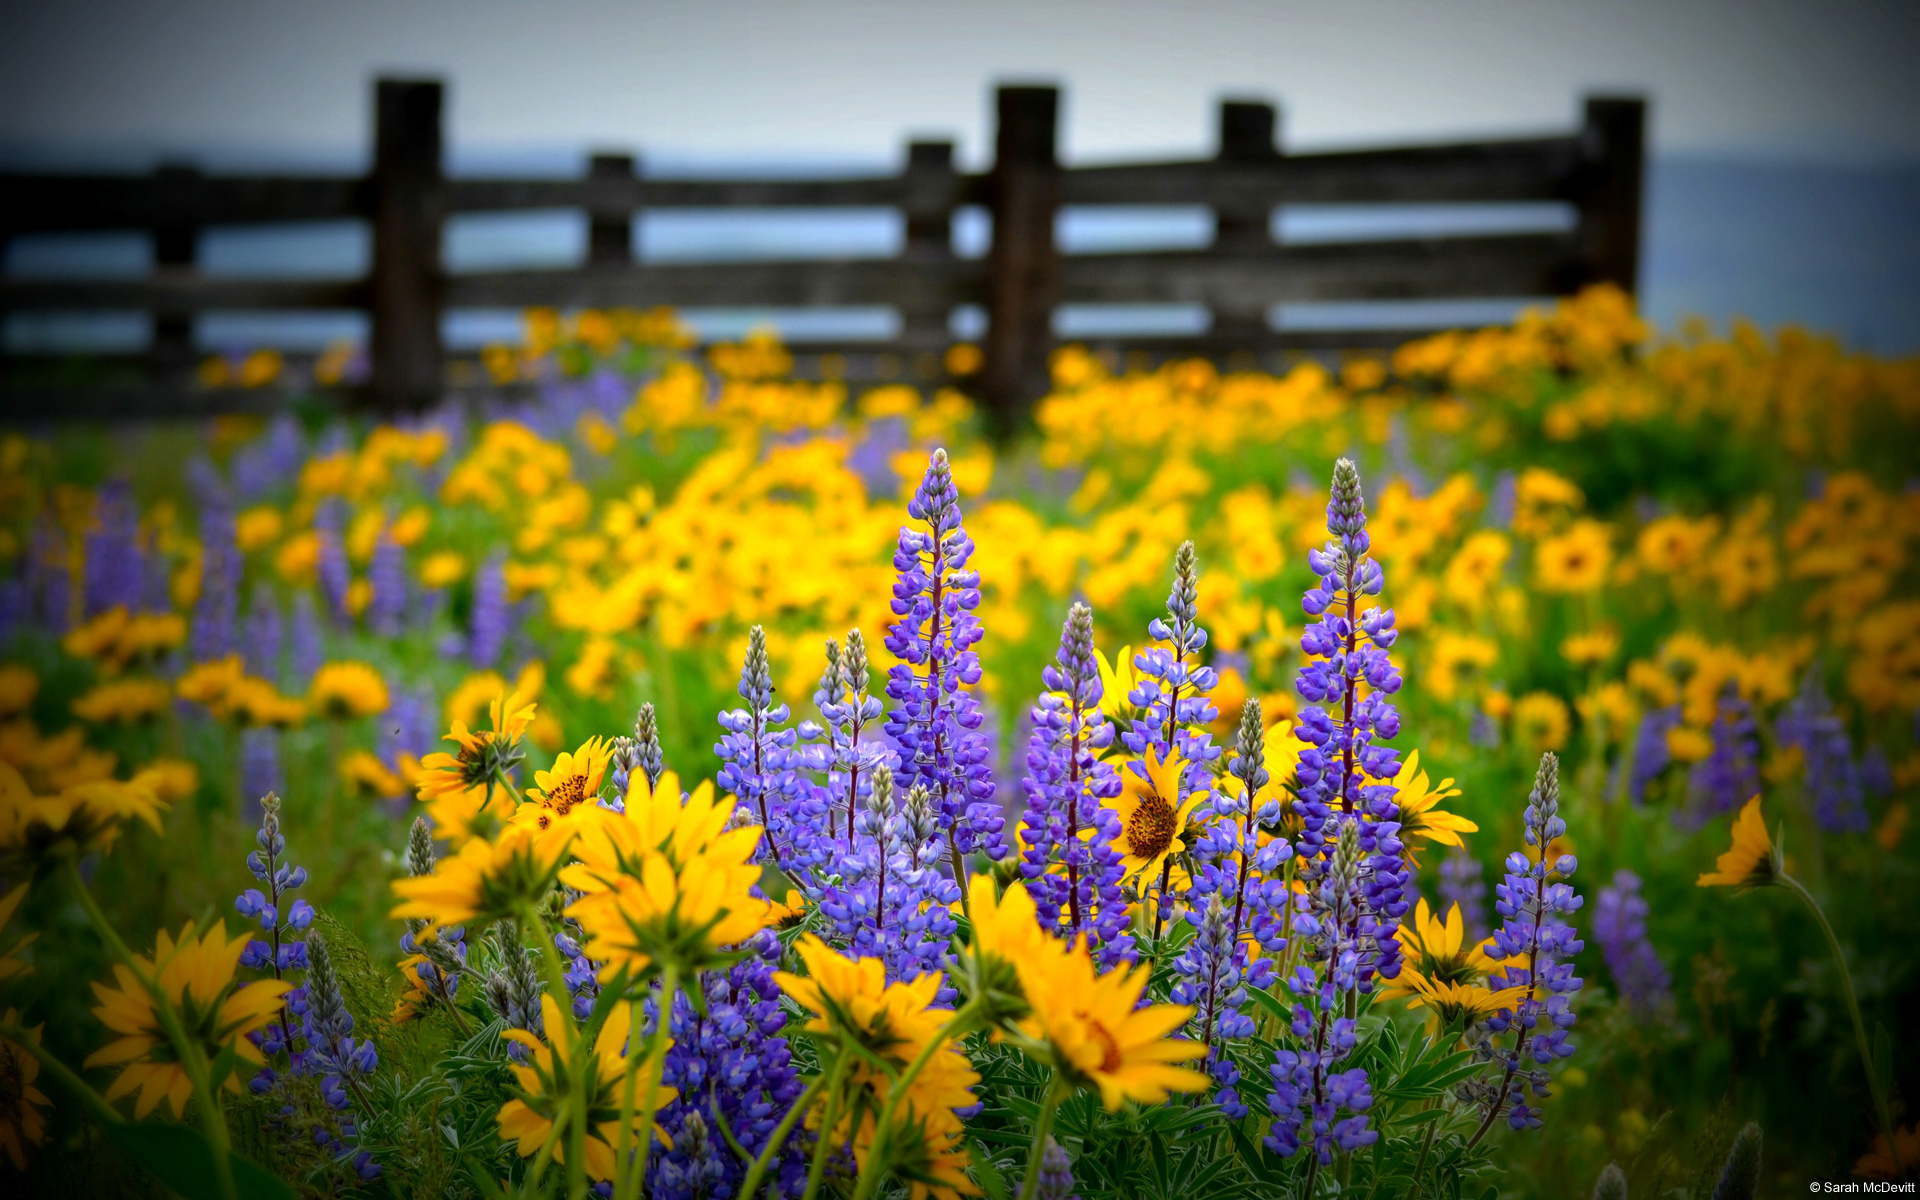 398793 descargar imagen tierra/naturaleza, flor, cerca, campo, flor purpura, flor silvestre, flor amarilla, flores: fondos de pantalla y protectores de pantalla gratis